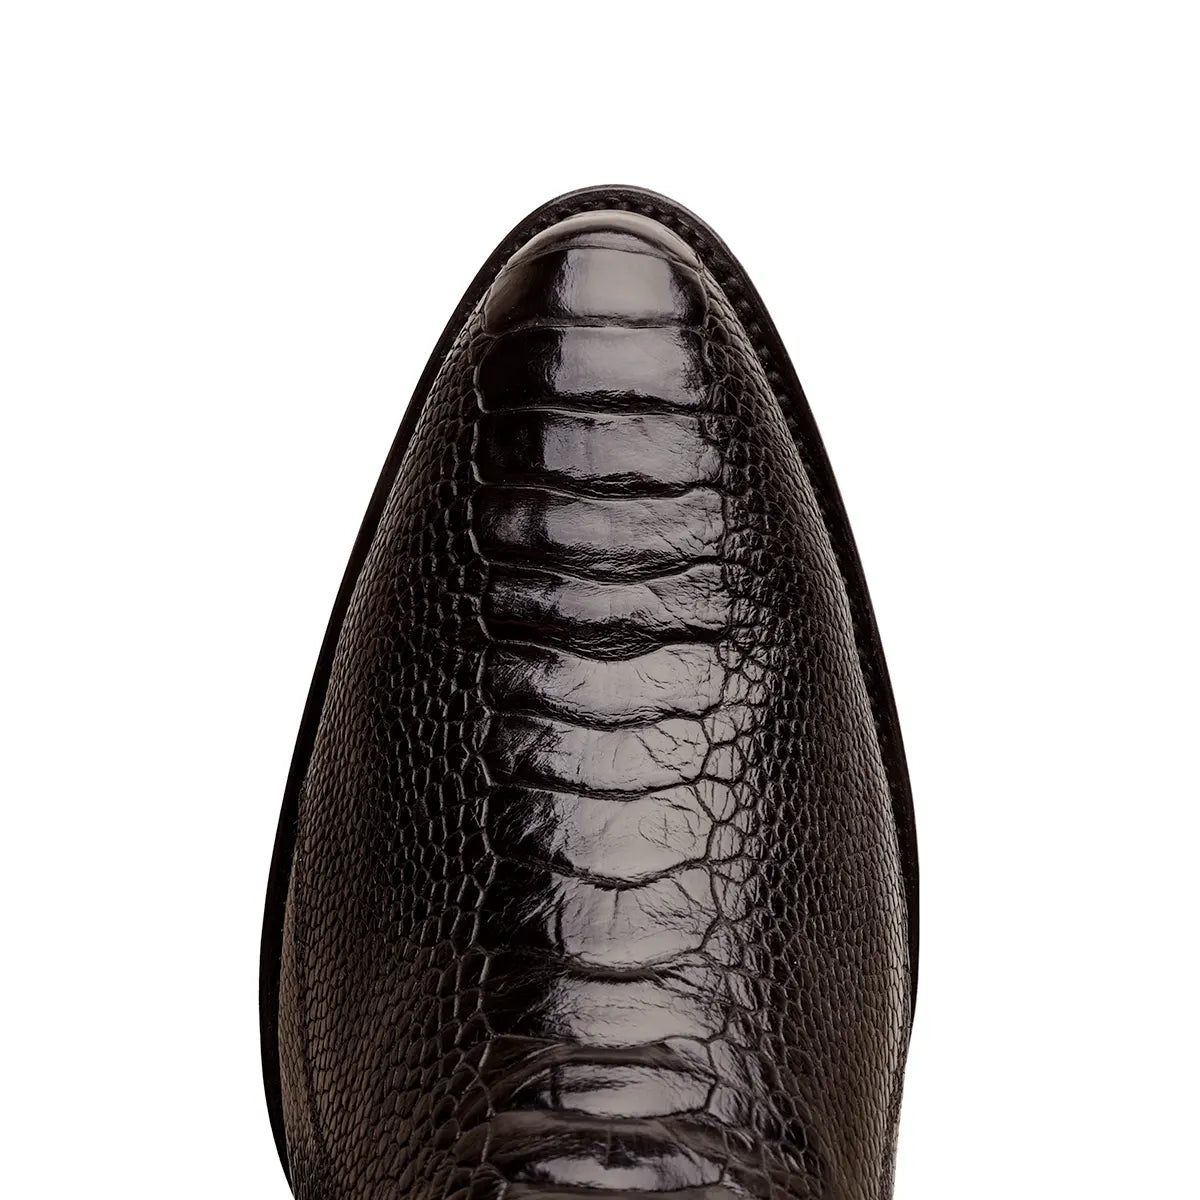 Collin Ostrich Leg Classic Western Boot - Black